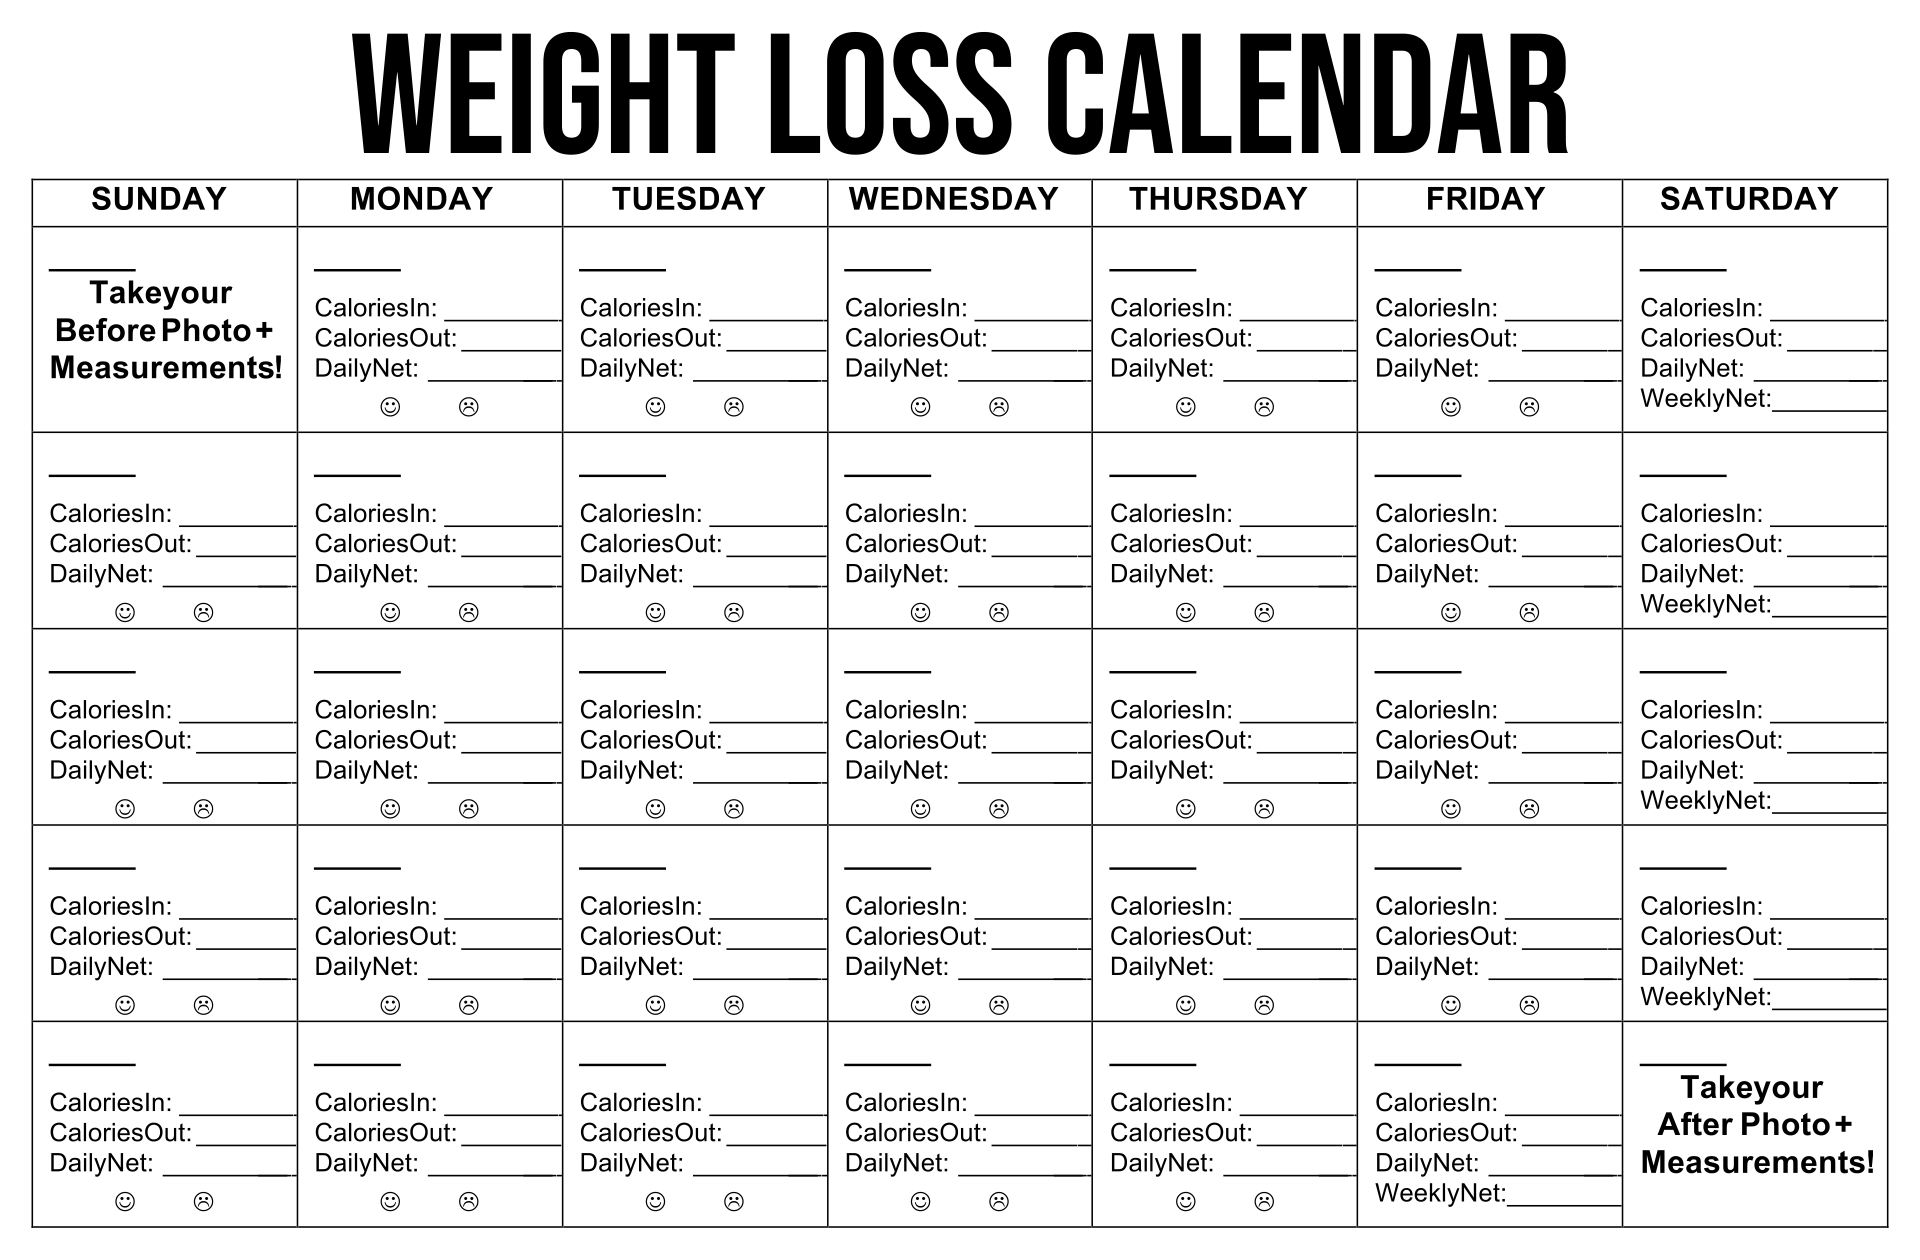 weight loss tracker graph template